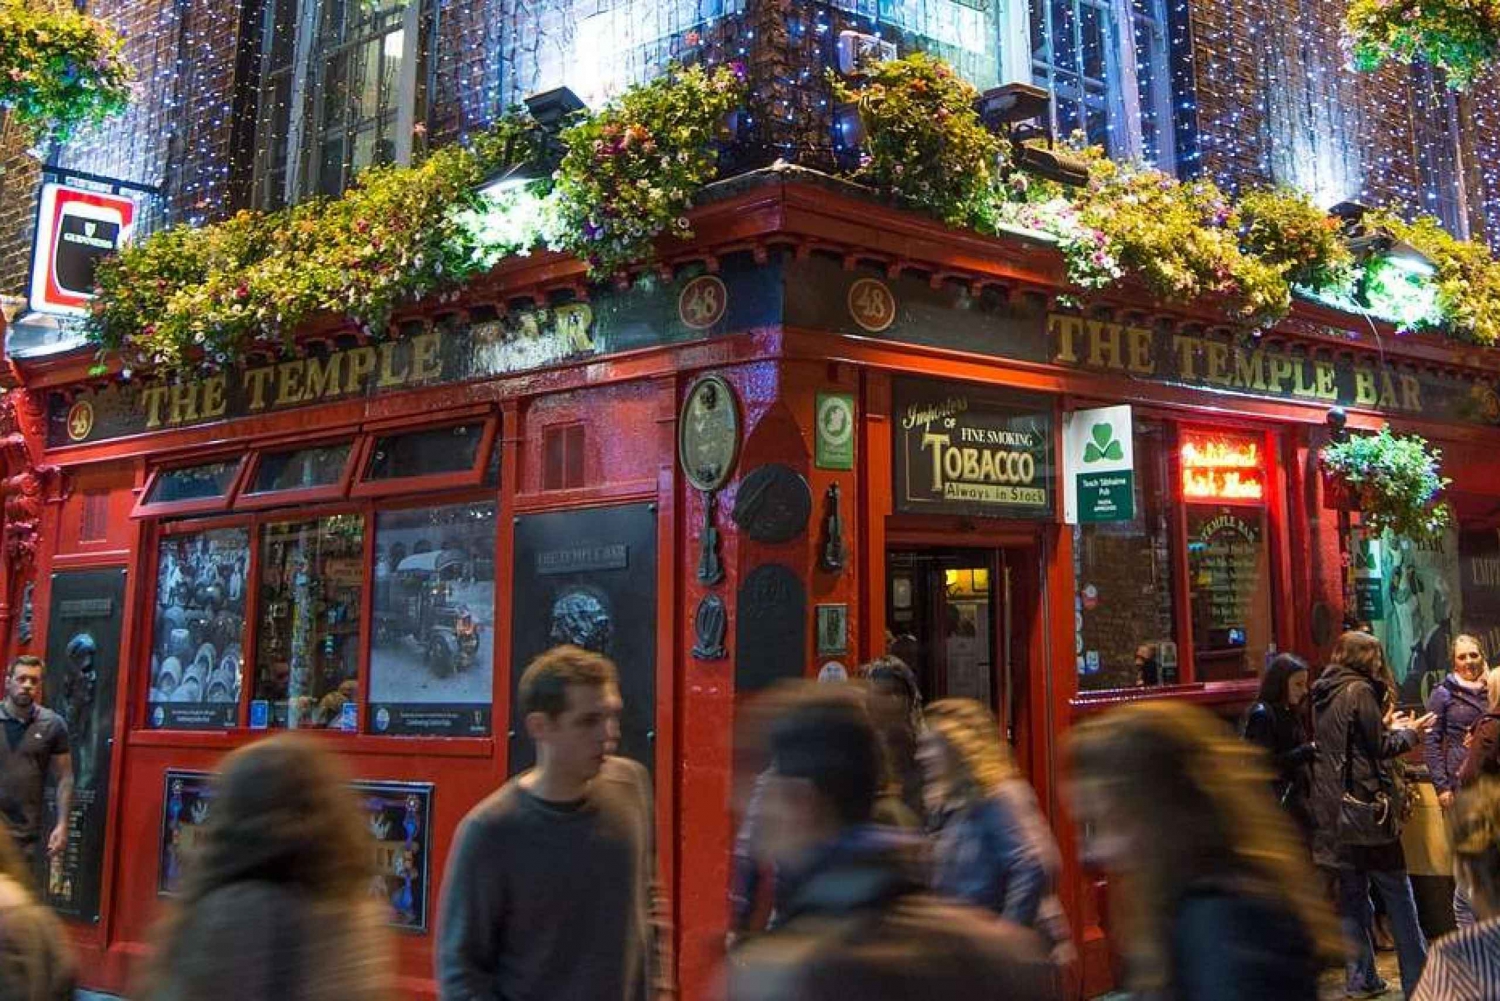 Dublin: Temple Bar: Self-Guided Smartphone Audio Tour of Temple Bar